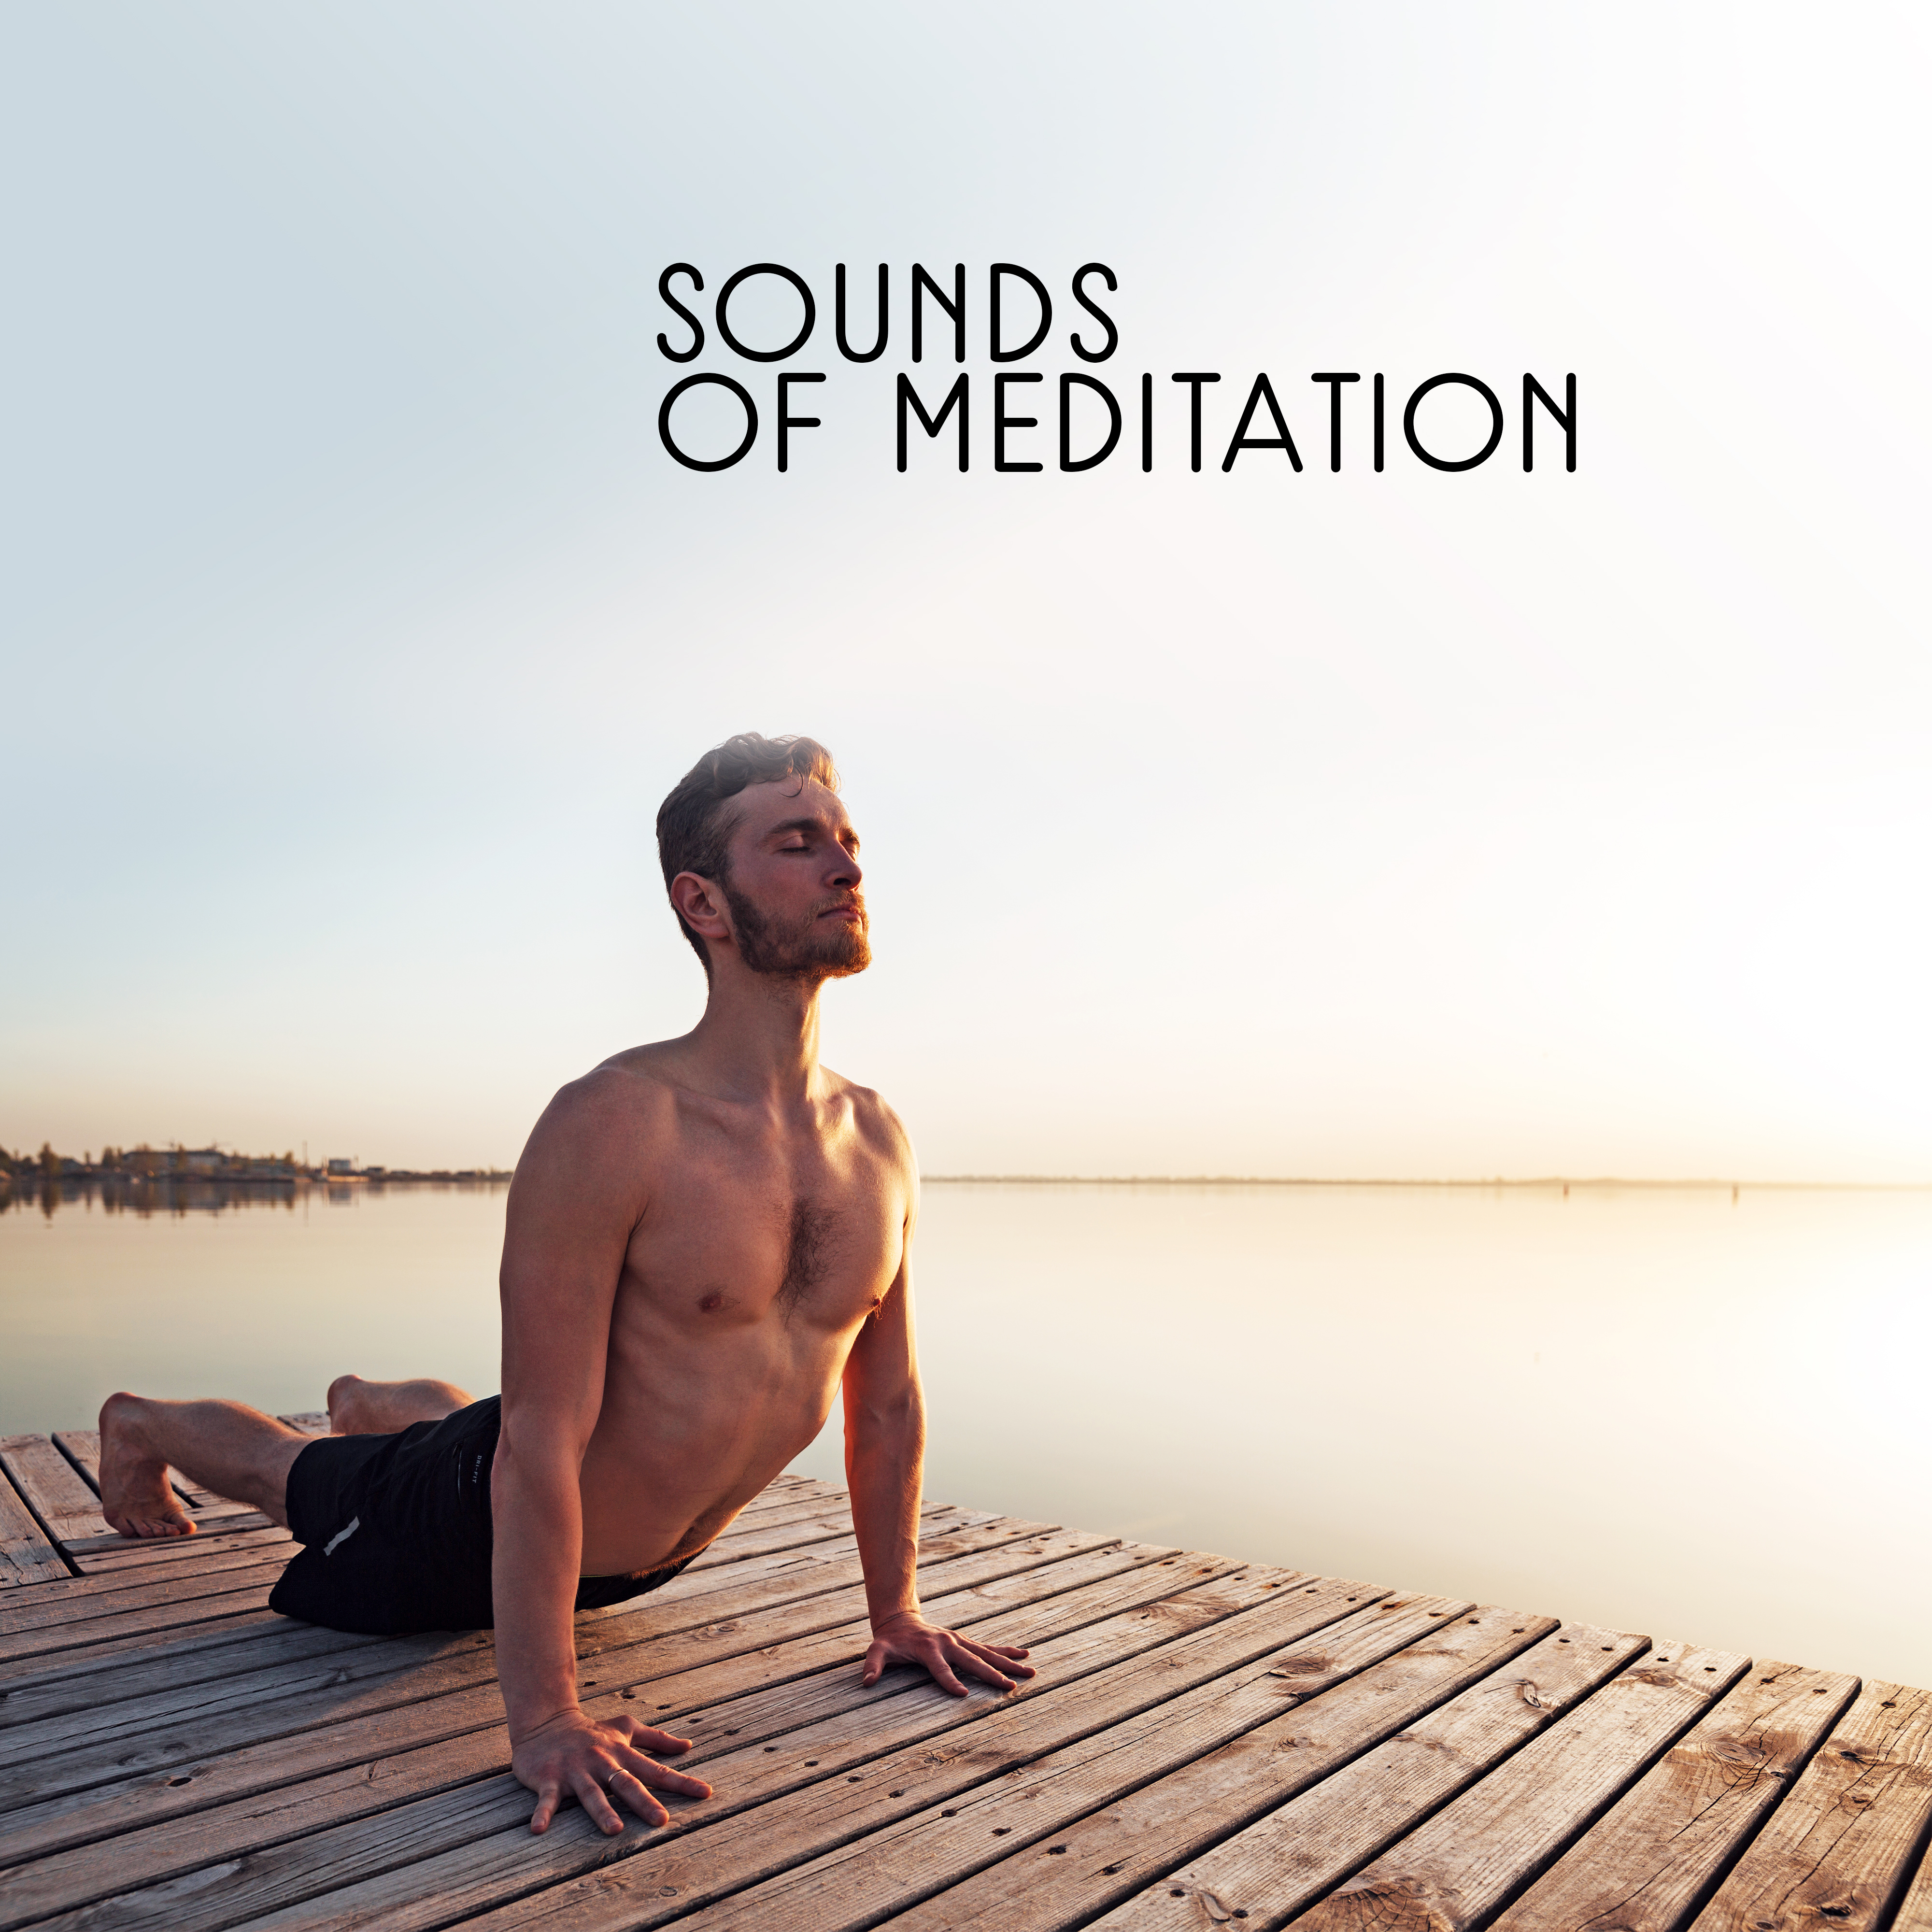 Sounds of Meditation  Buddhism Meditation Music, Zen, Yoga, Deep Bliss, Relaxation, Calm of Mind